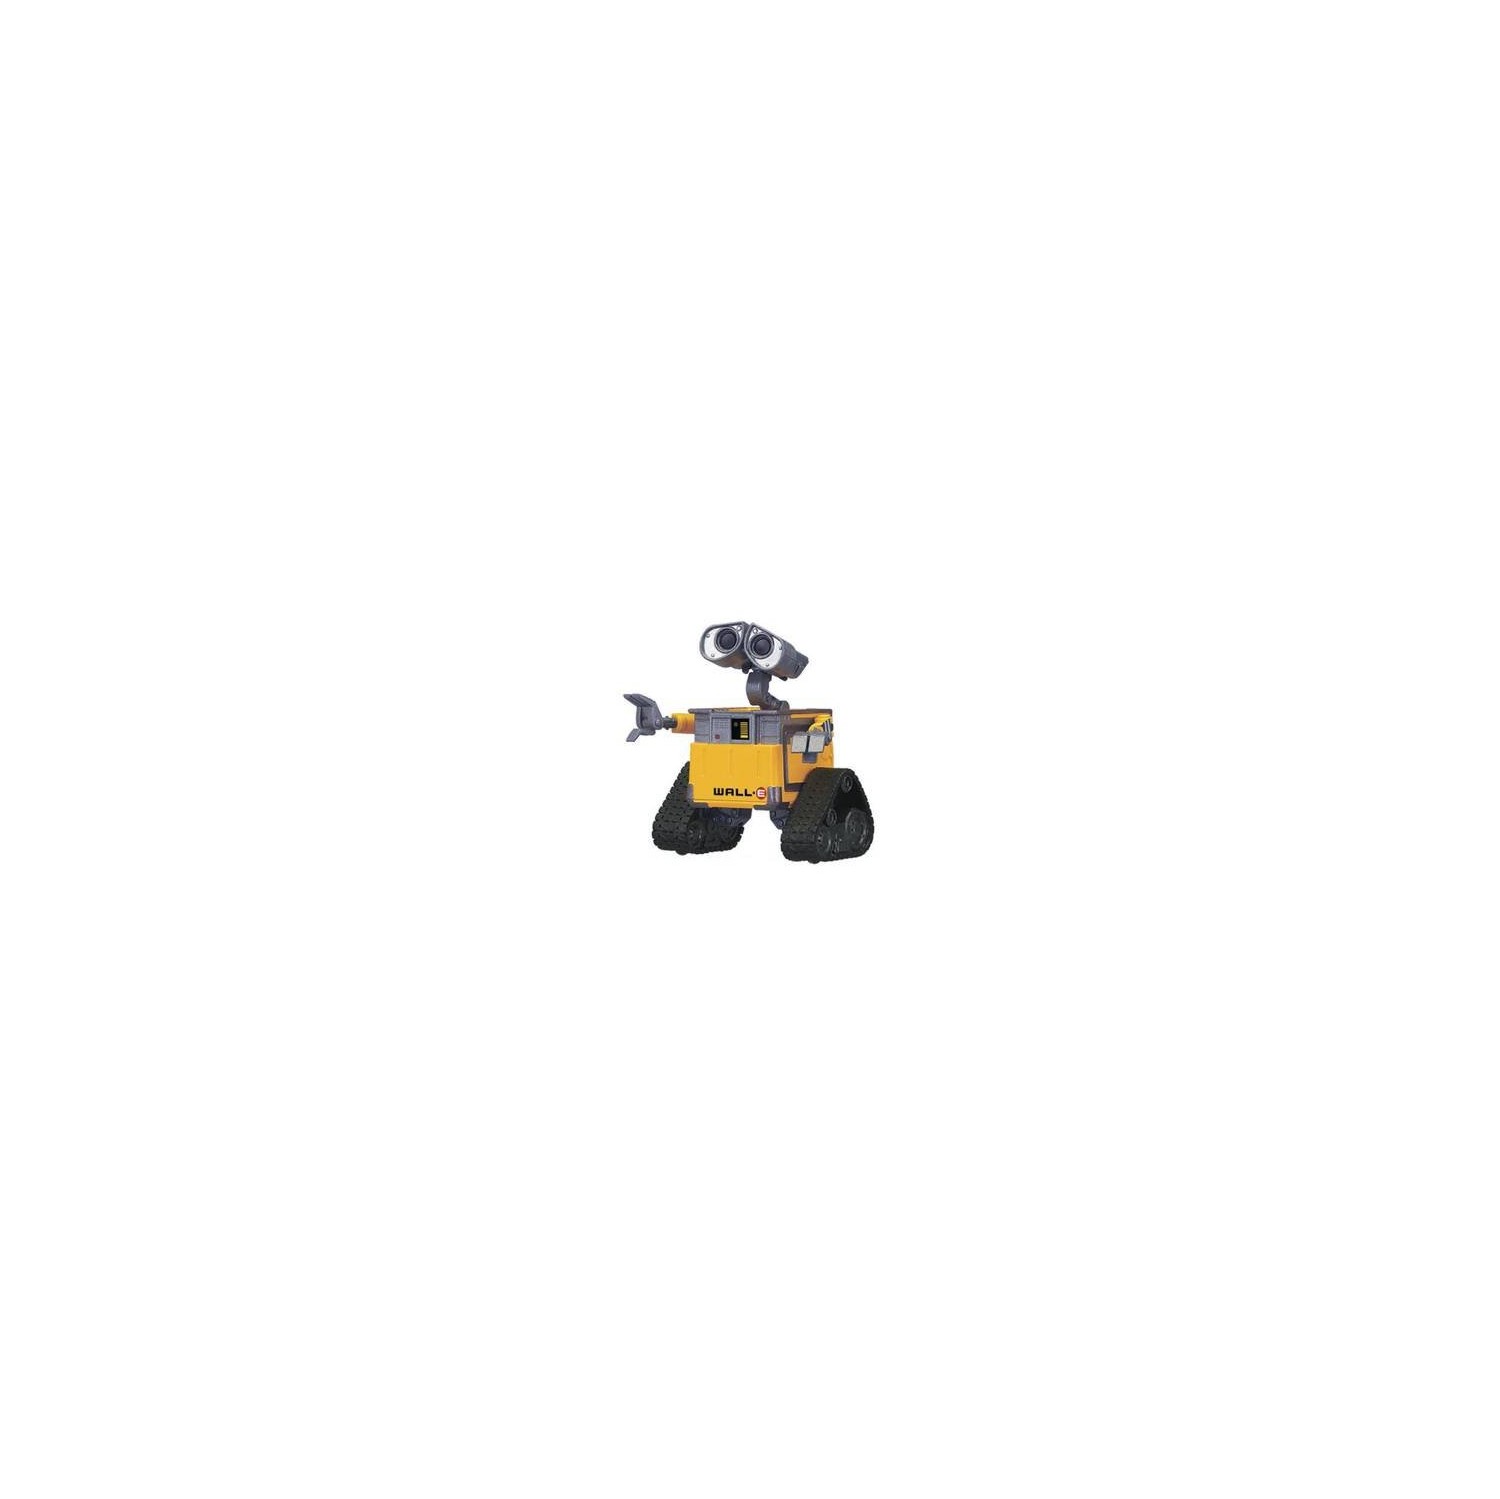 Disney Pixar Factory New WALL-E Movie Figure